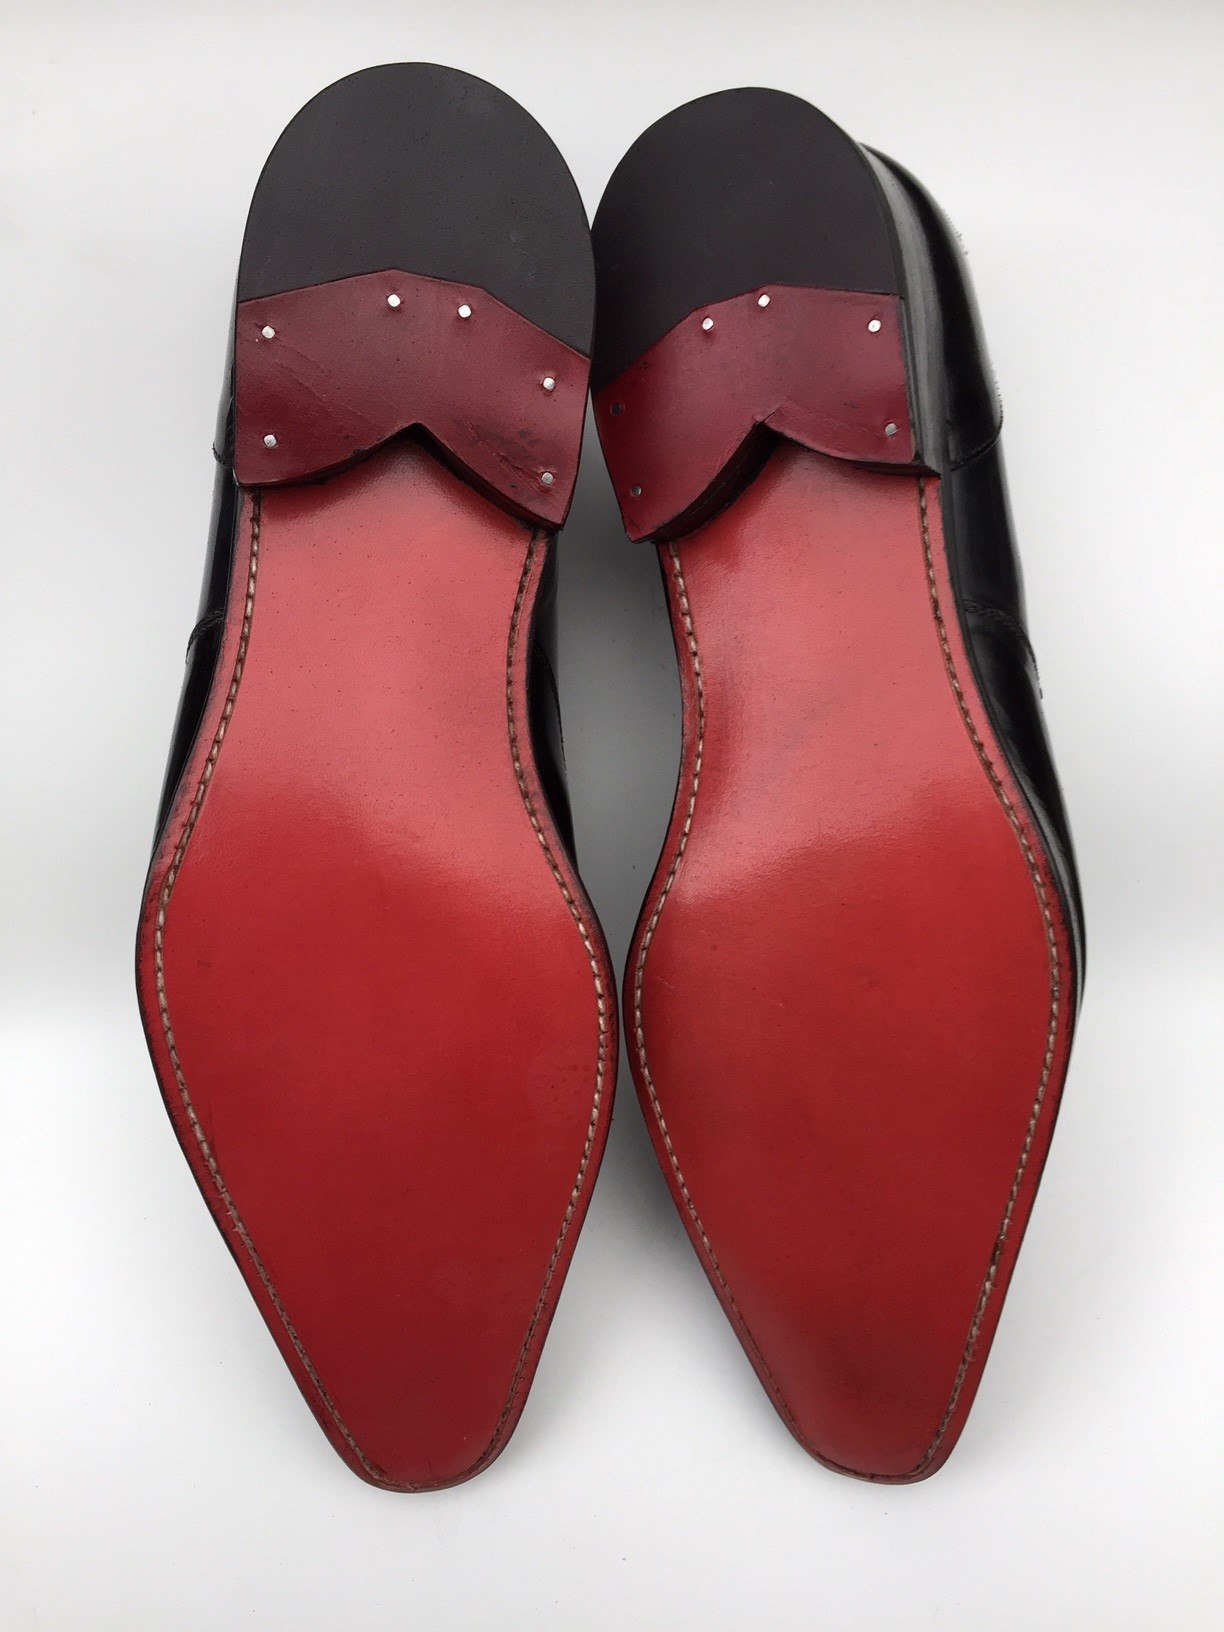 Louis Vuitton Red Bottoms Mens Dress Shoes